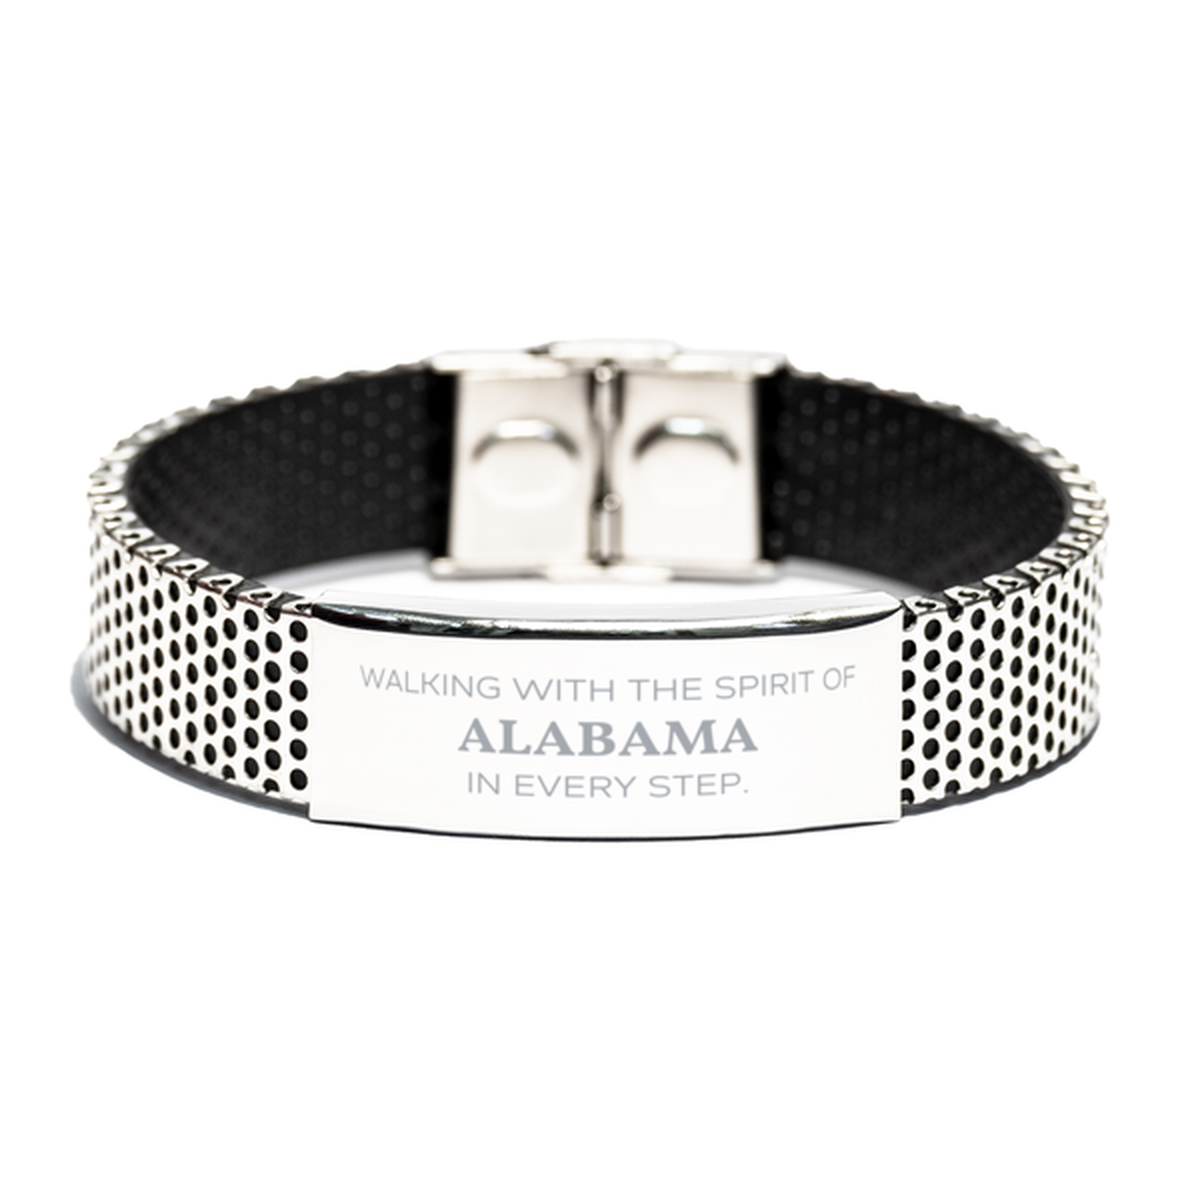 Alabama Gifts, Walking with the spirit, Love Alabama Birthday Christmas Stainless Steel Bracelet For Alabama People, Men, Women, Friends